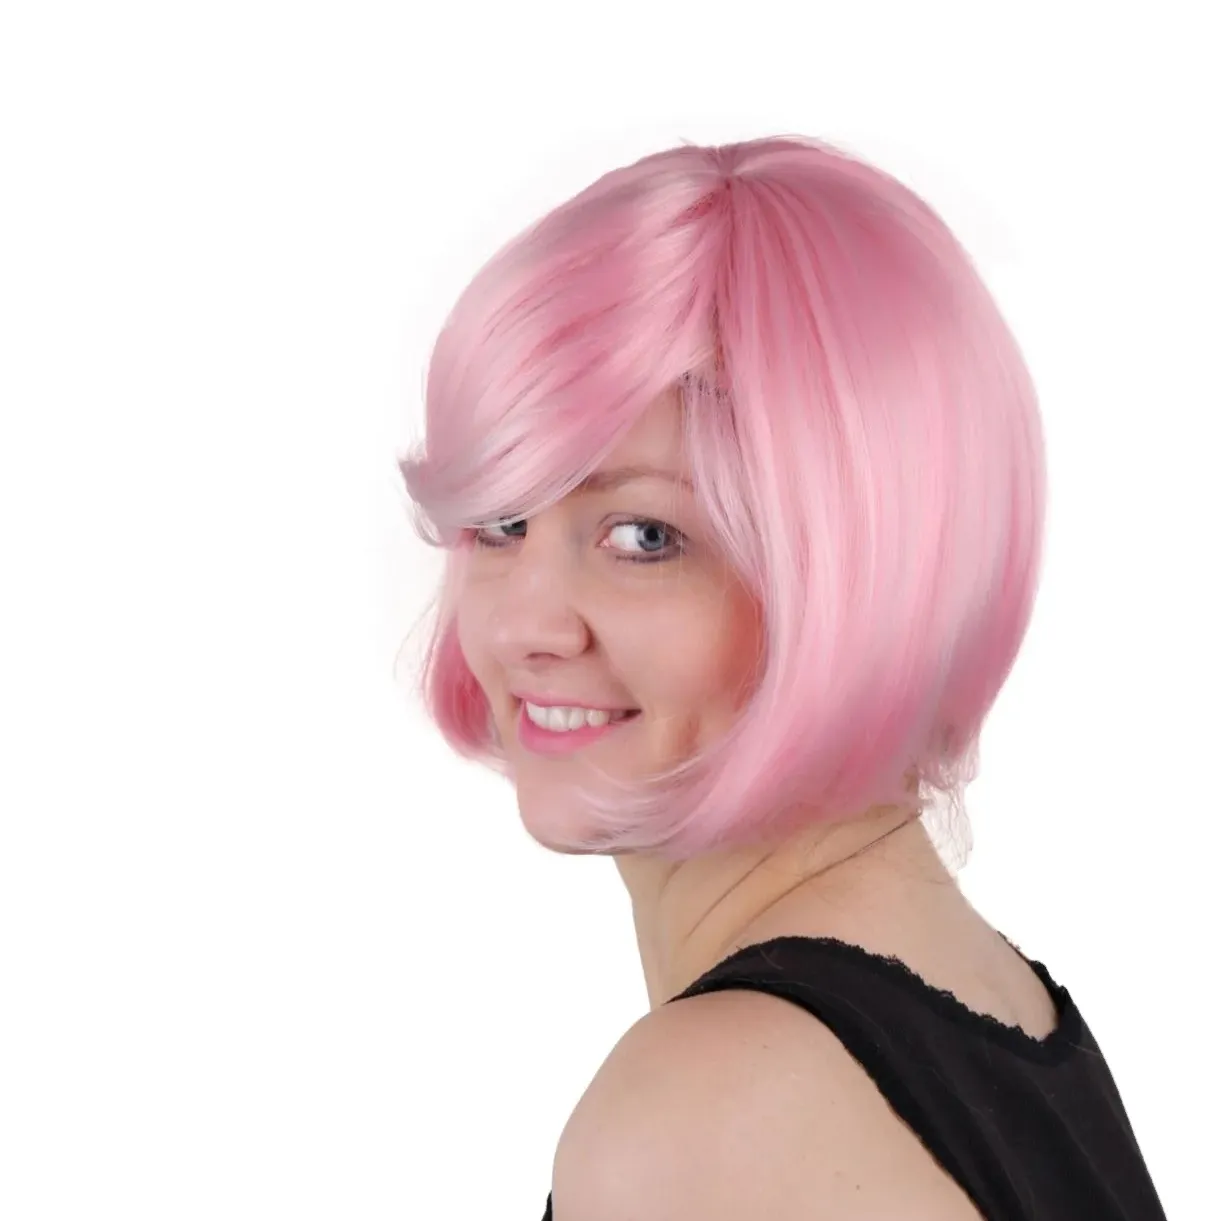 Buona vendita parrucca Remy capelli crudi vergini